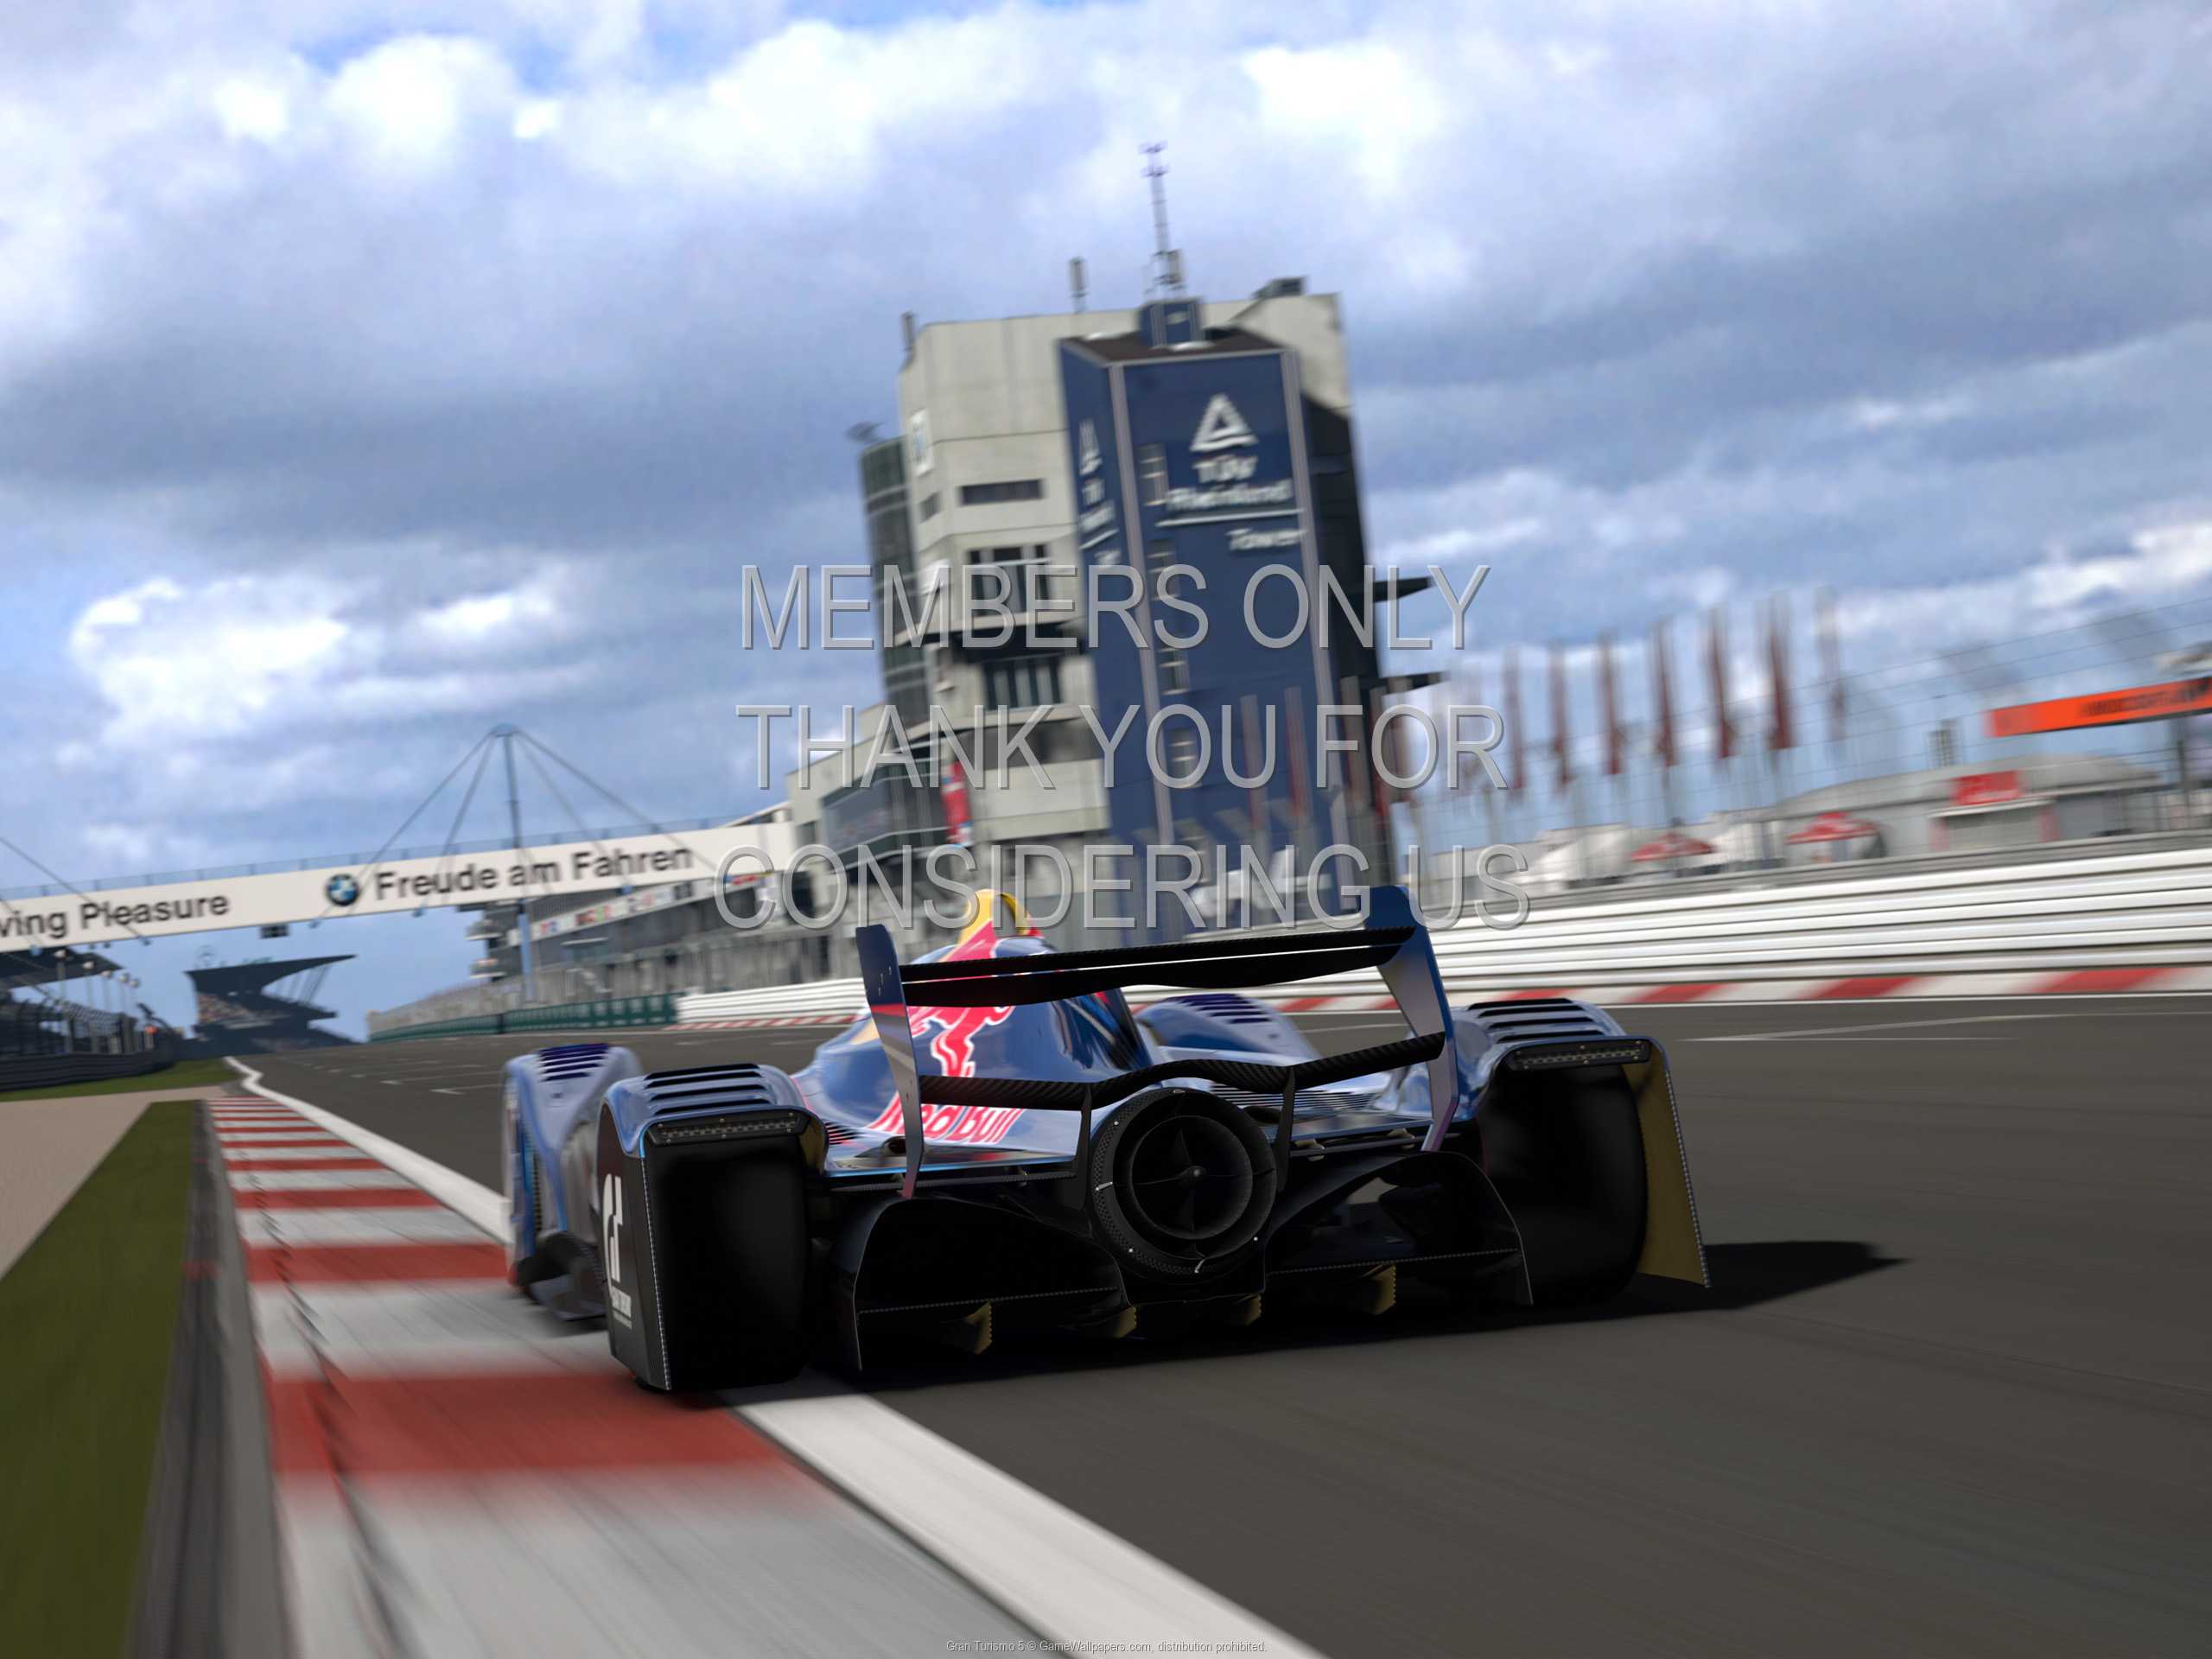 Gran Turismo 5 1080p Horizontal Mobile wallpaper or background 29